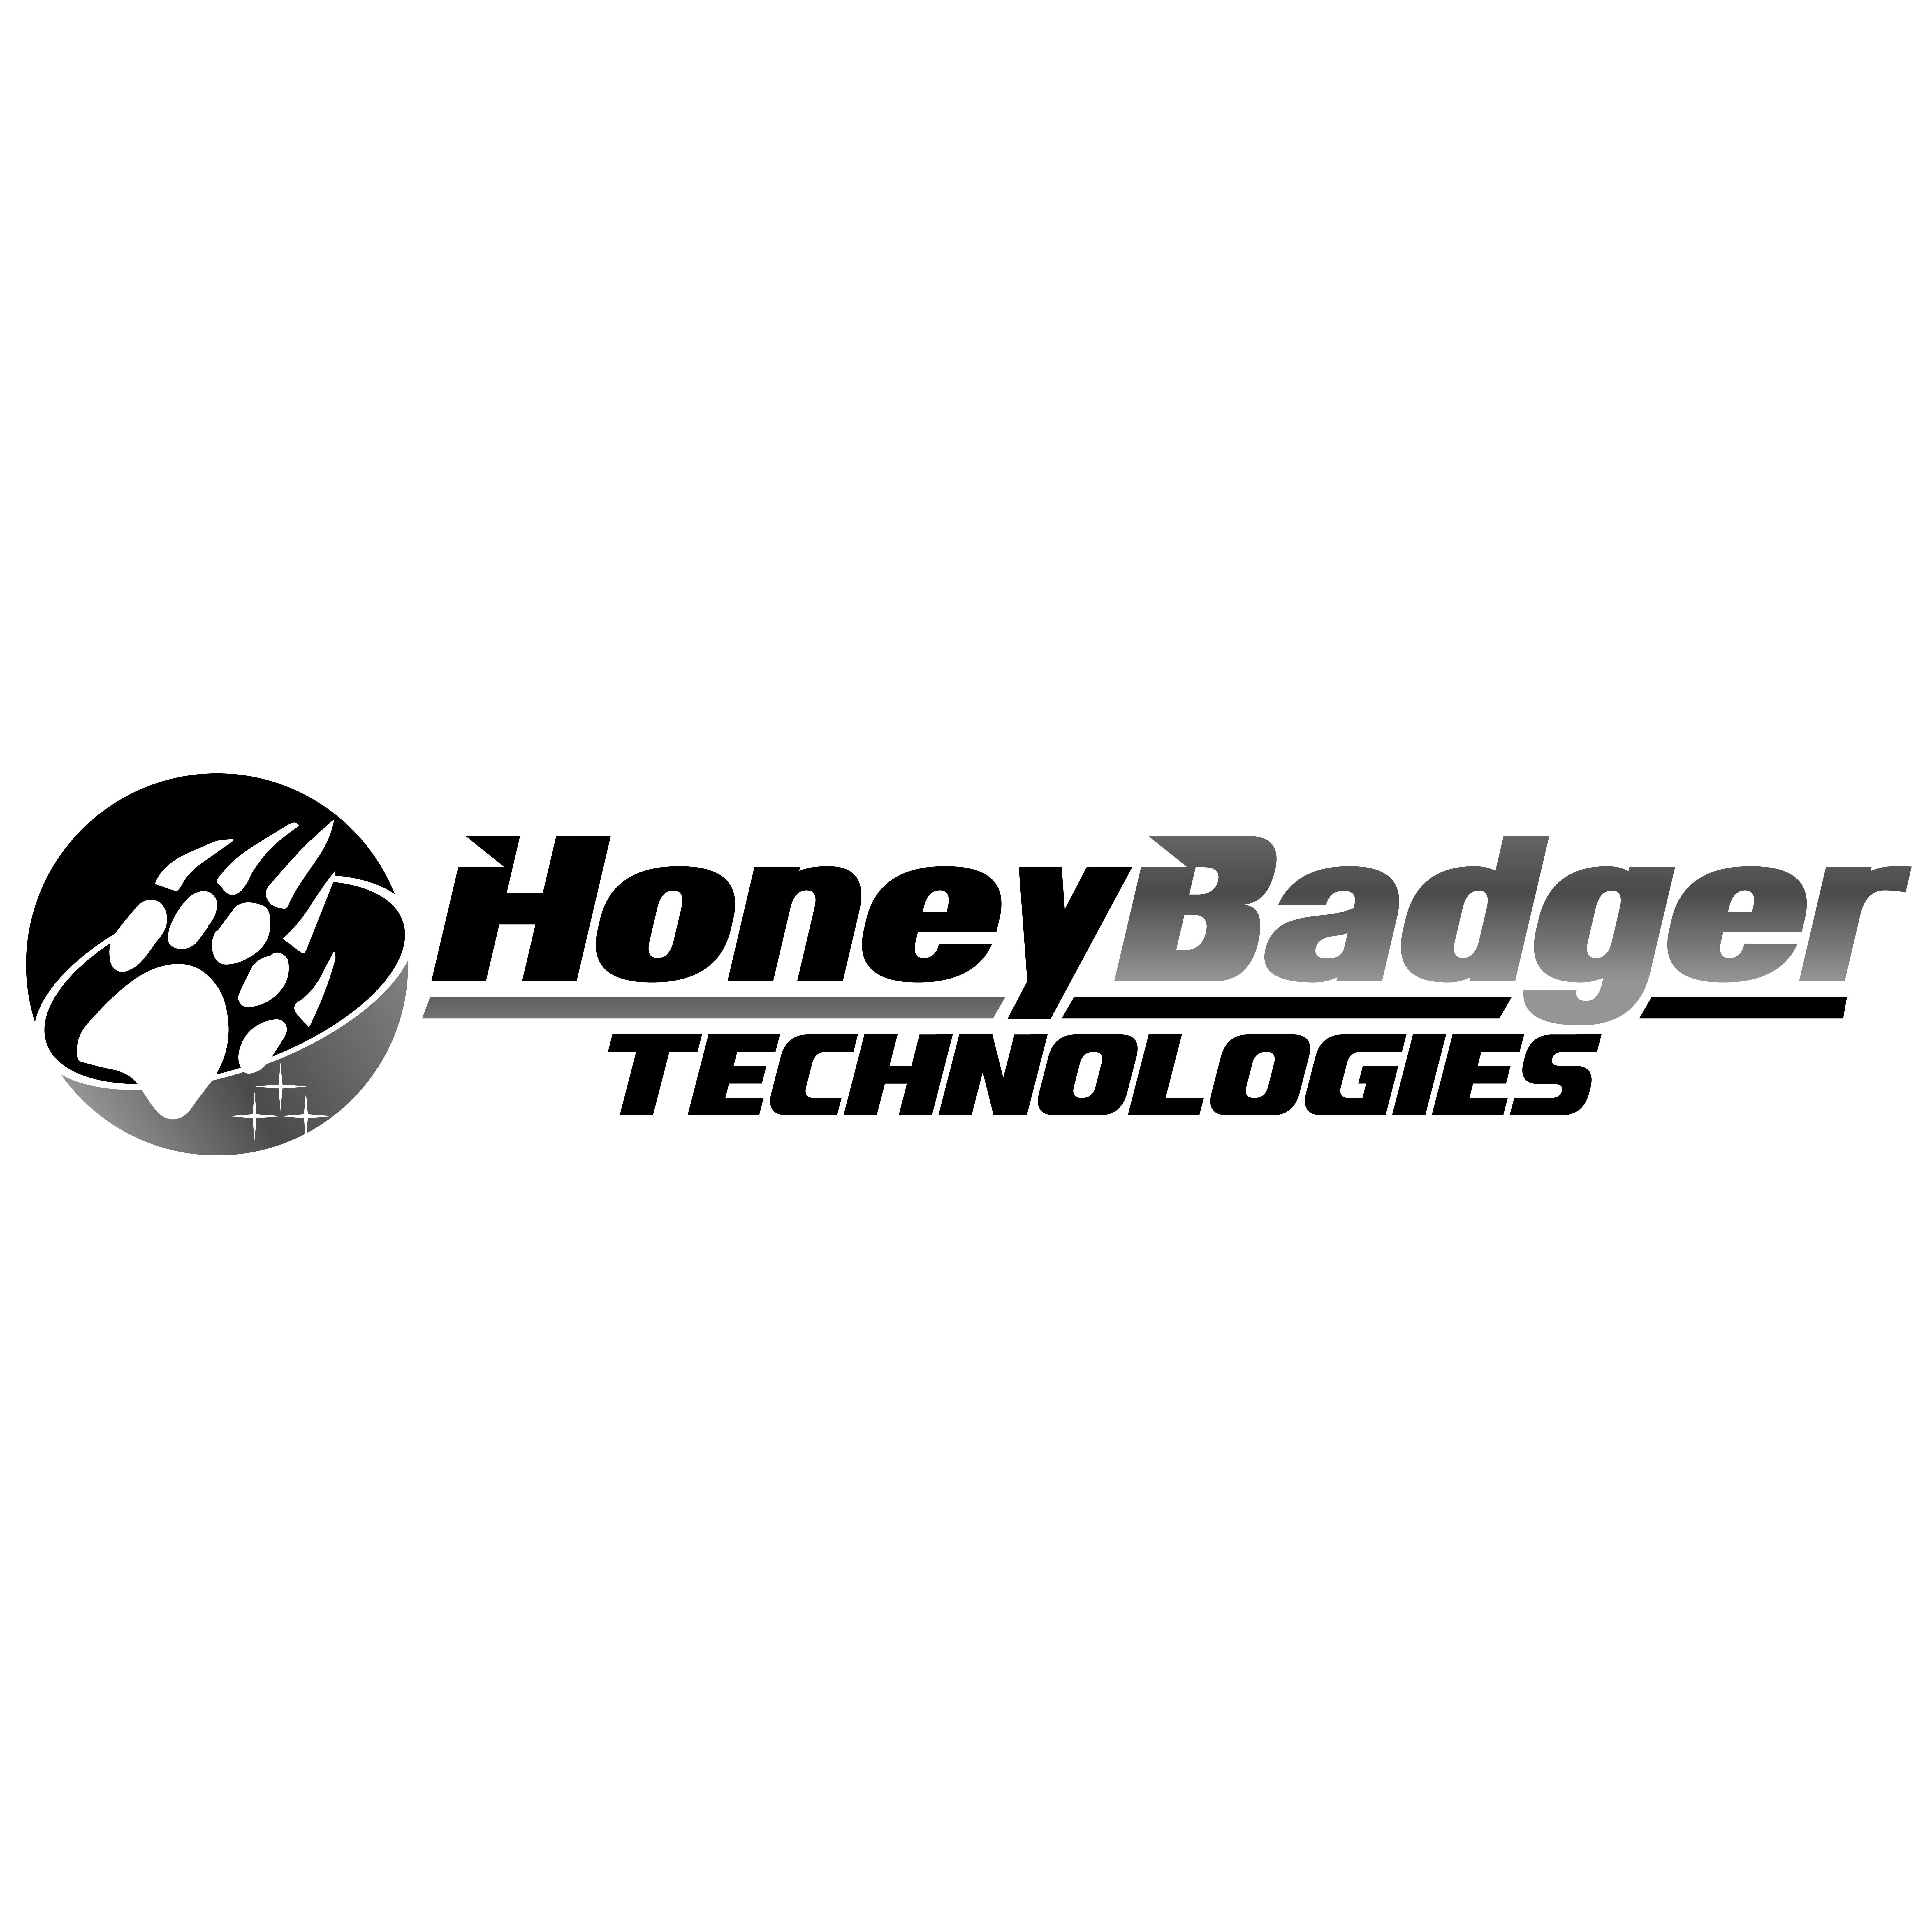 HoneyBadger Technologies - Kingsgrove, NSW 2208 - (13) 0042 8808 | ShowMeLocal.com